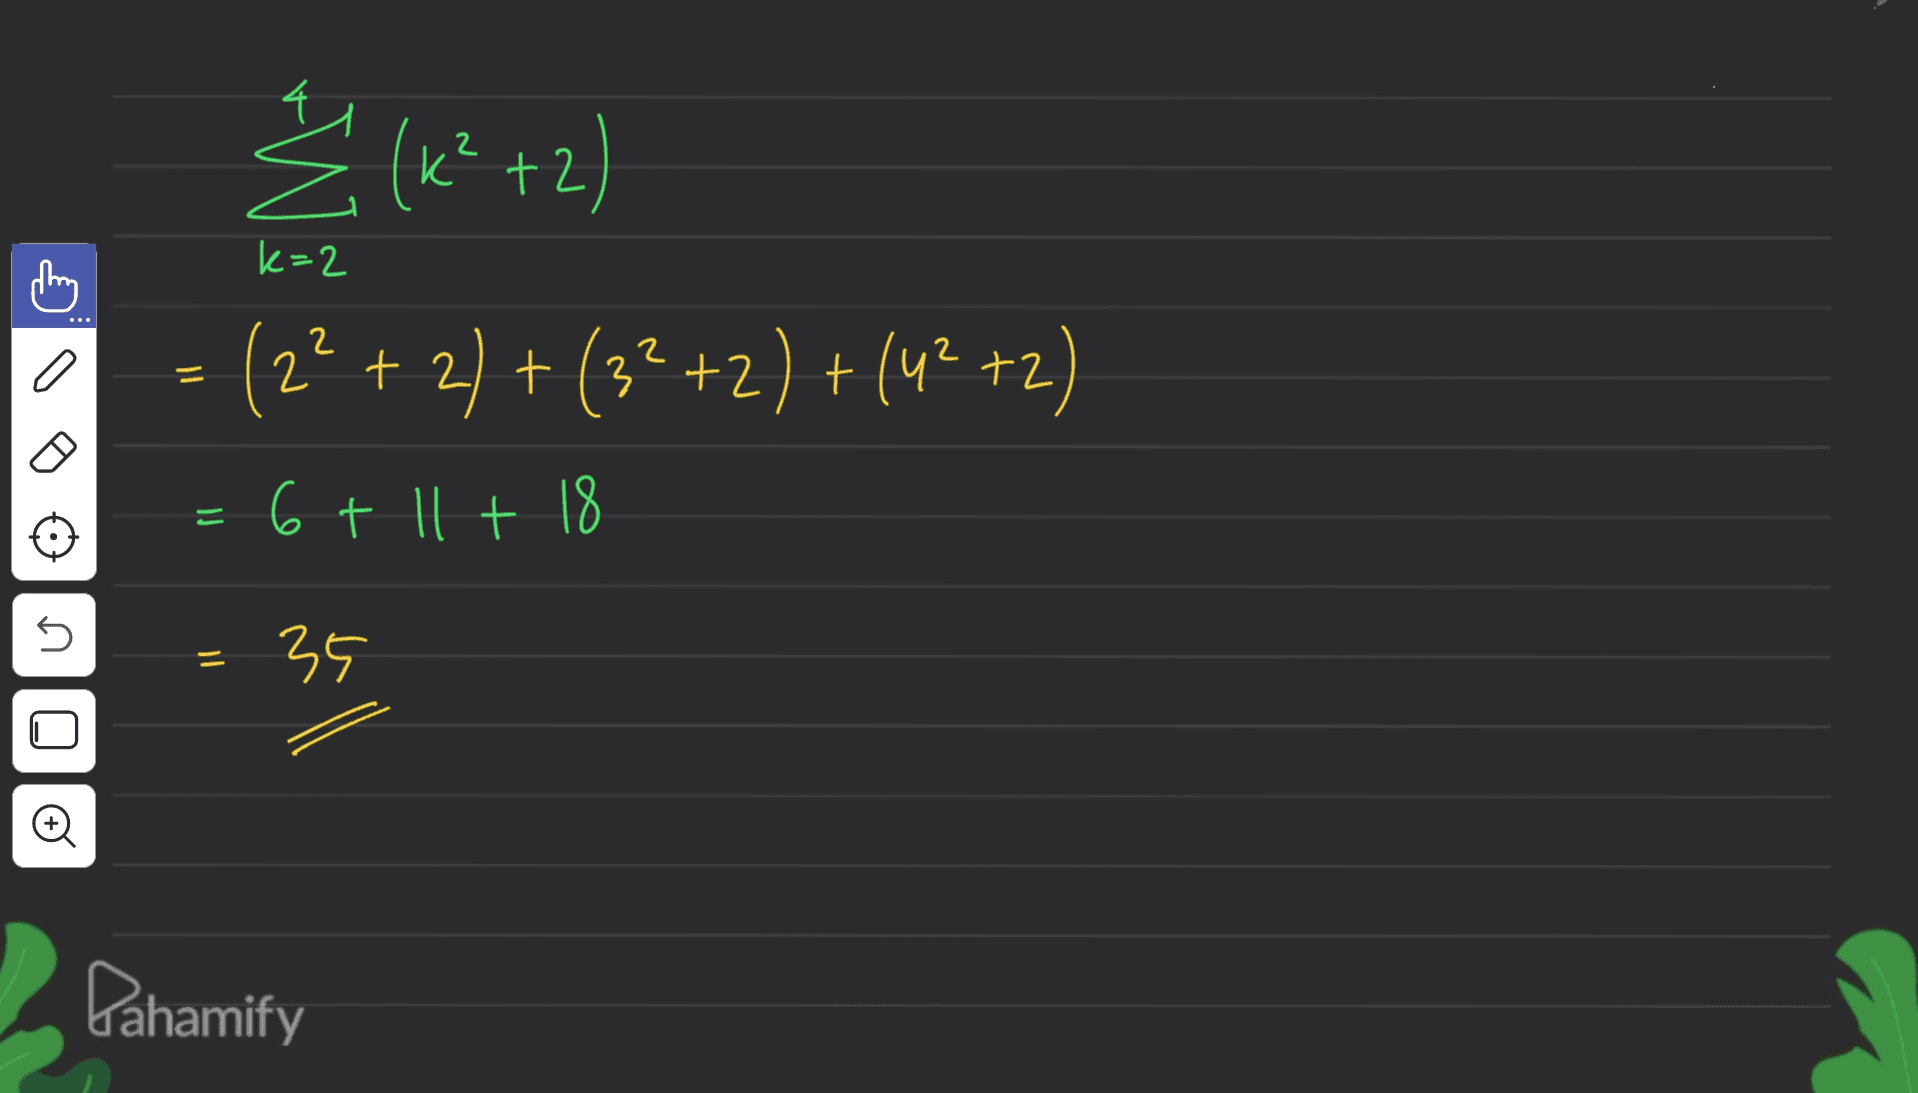 2 e t2 k=2 - (2? + 2) + (32 +2) + (42 +2) Ct || + 18 [l U U w w = 35 0 Dahamify 